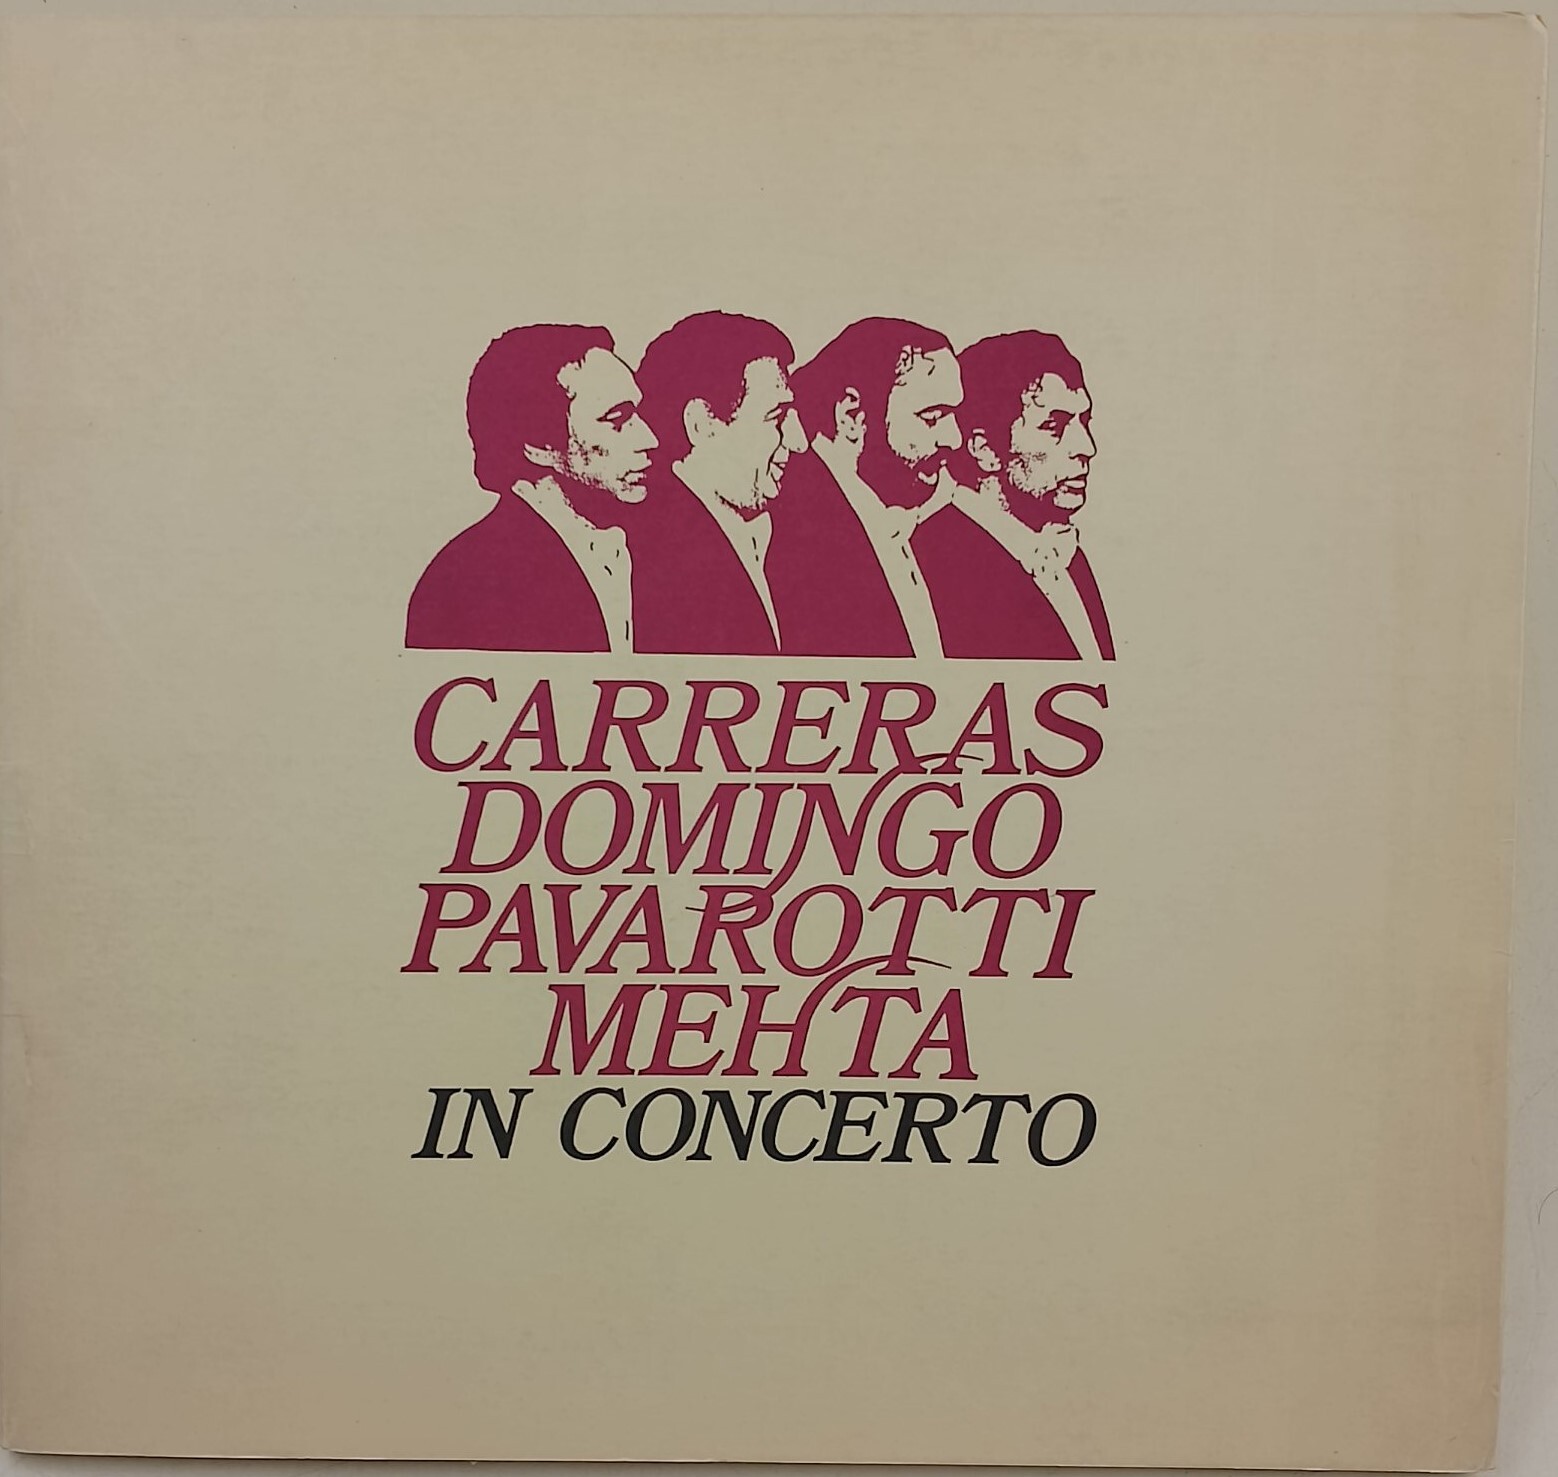 Carreras-Domingo-Pavarotti-Metha in concerto